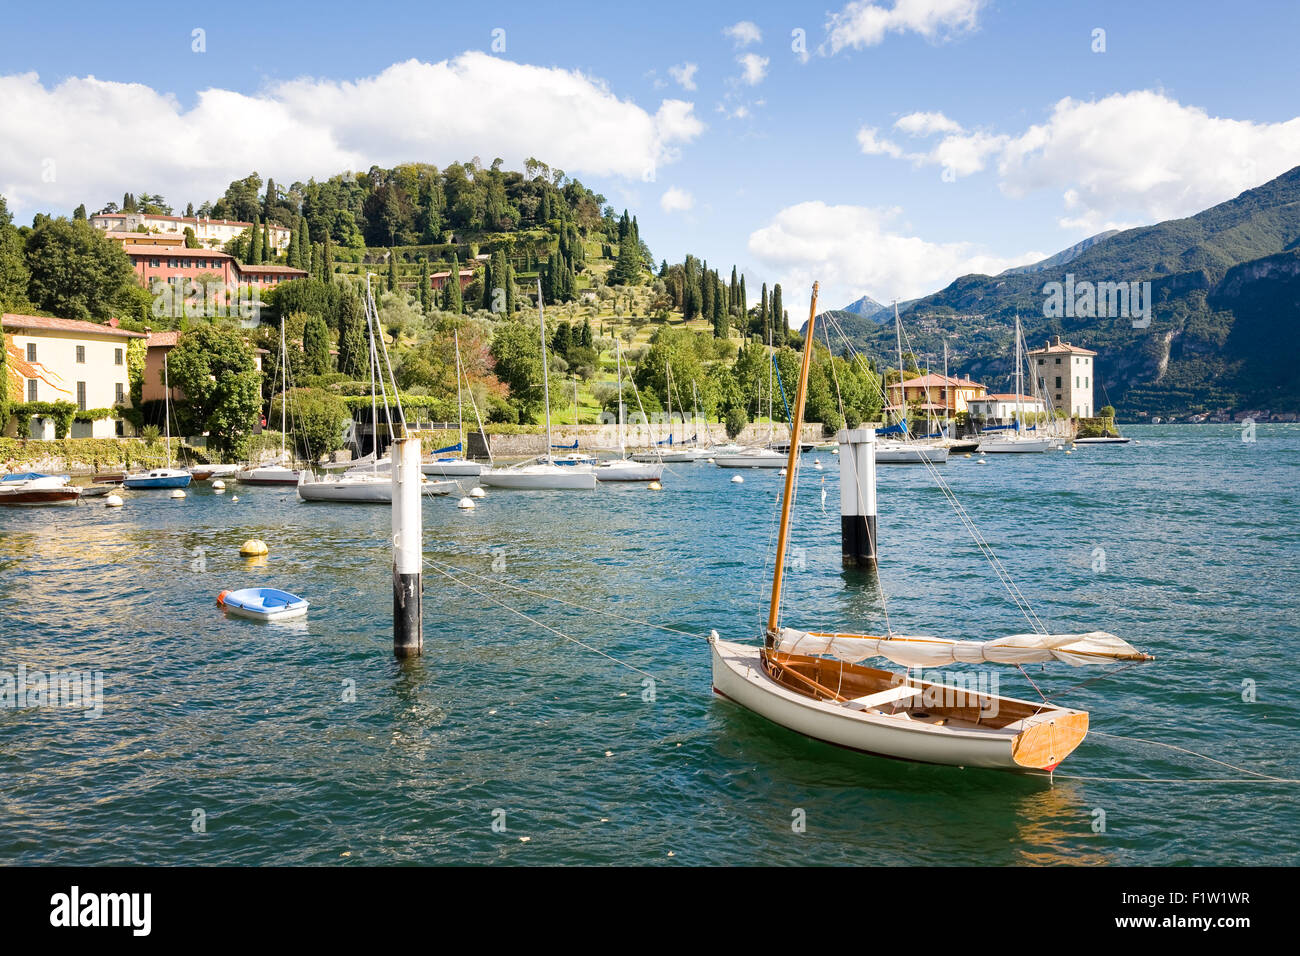 The harbour of Pescallo in Bellagio, a town on the Como Lake, Italy Stock Photo